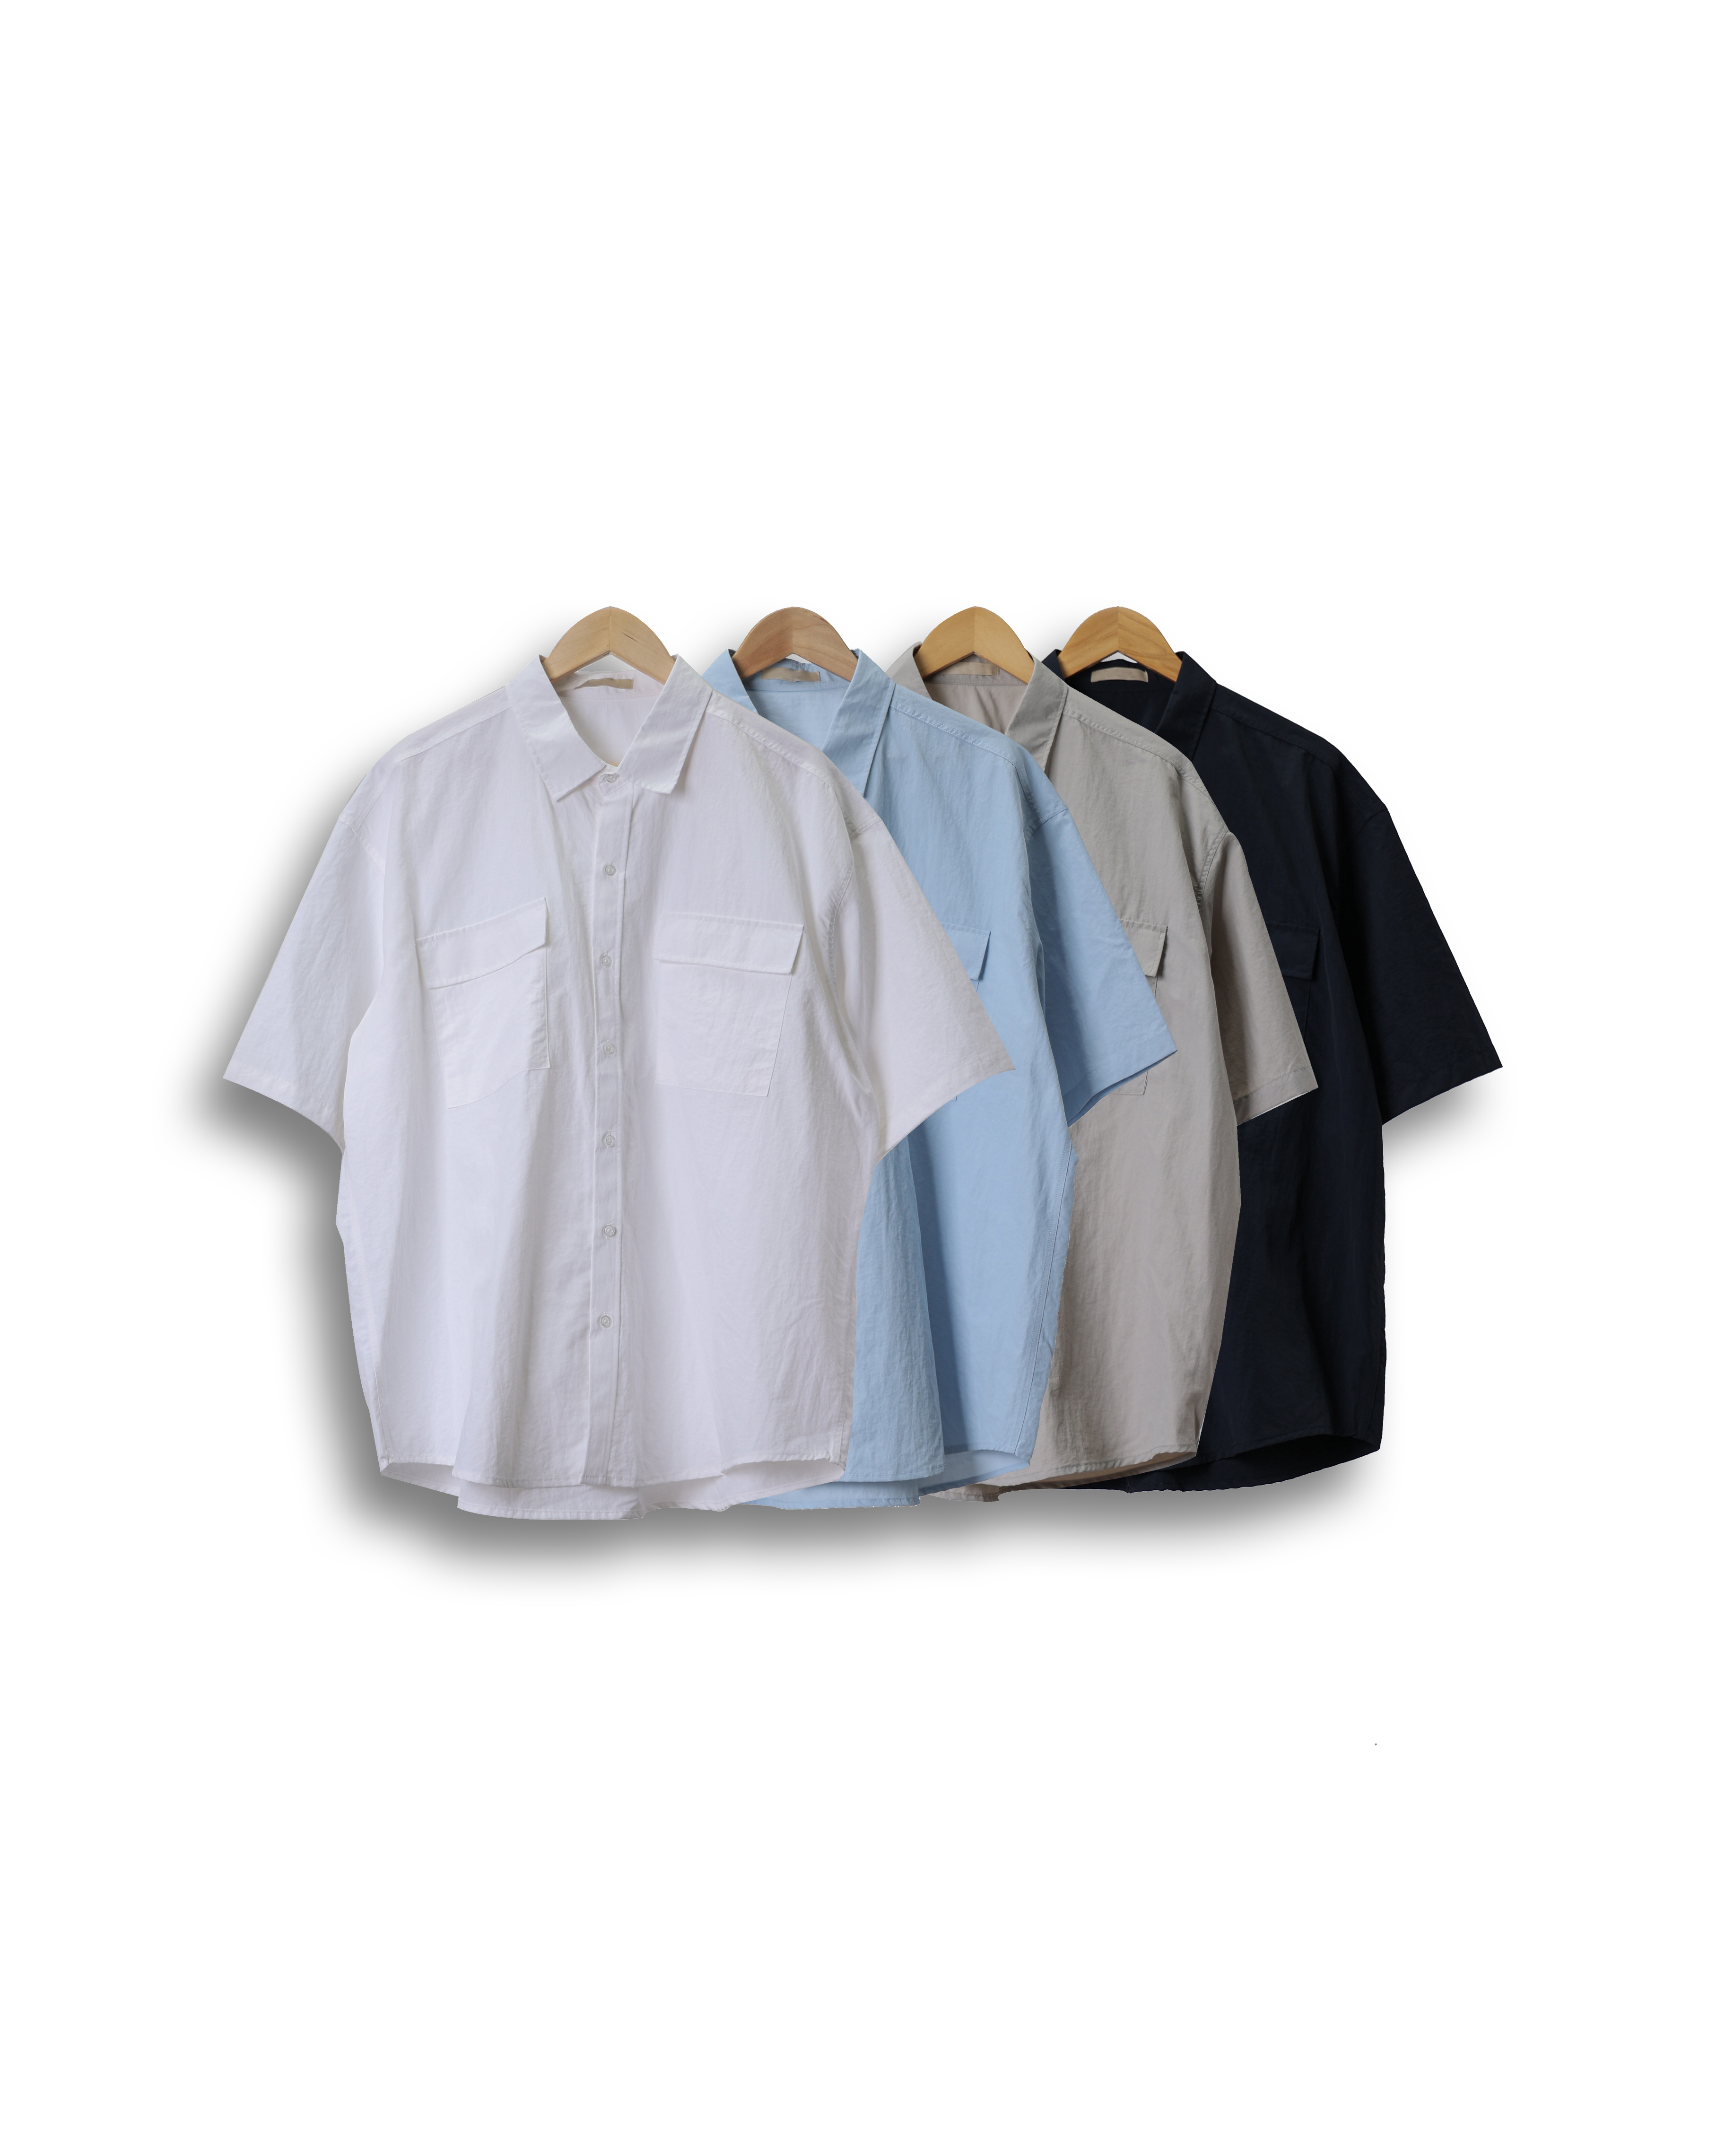 SPRY Two Pocket City Over Half Shirts (Navy/Gray/Sky Blue/White) - 3차 리오더 (6/13 배송예정)